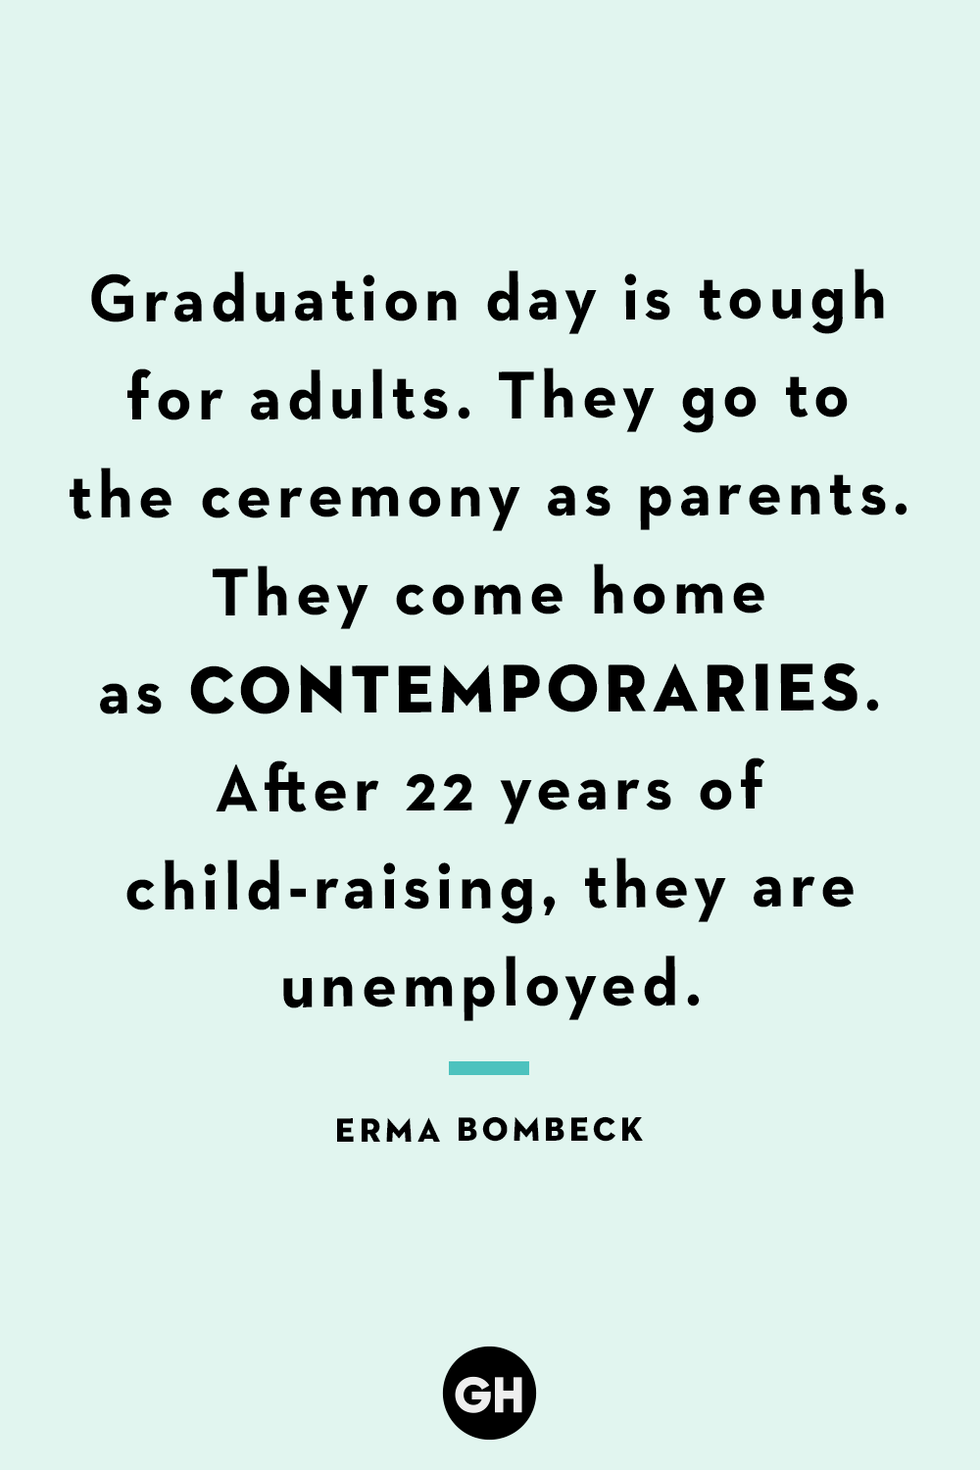 funny graduation quotes — erma bombeck